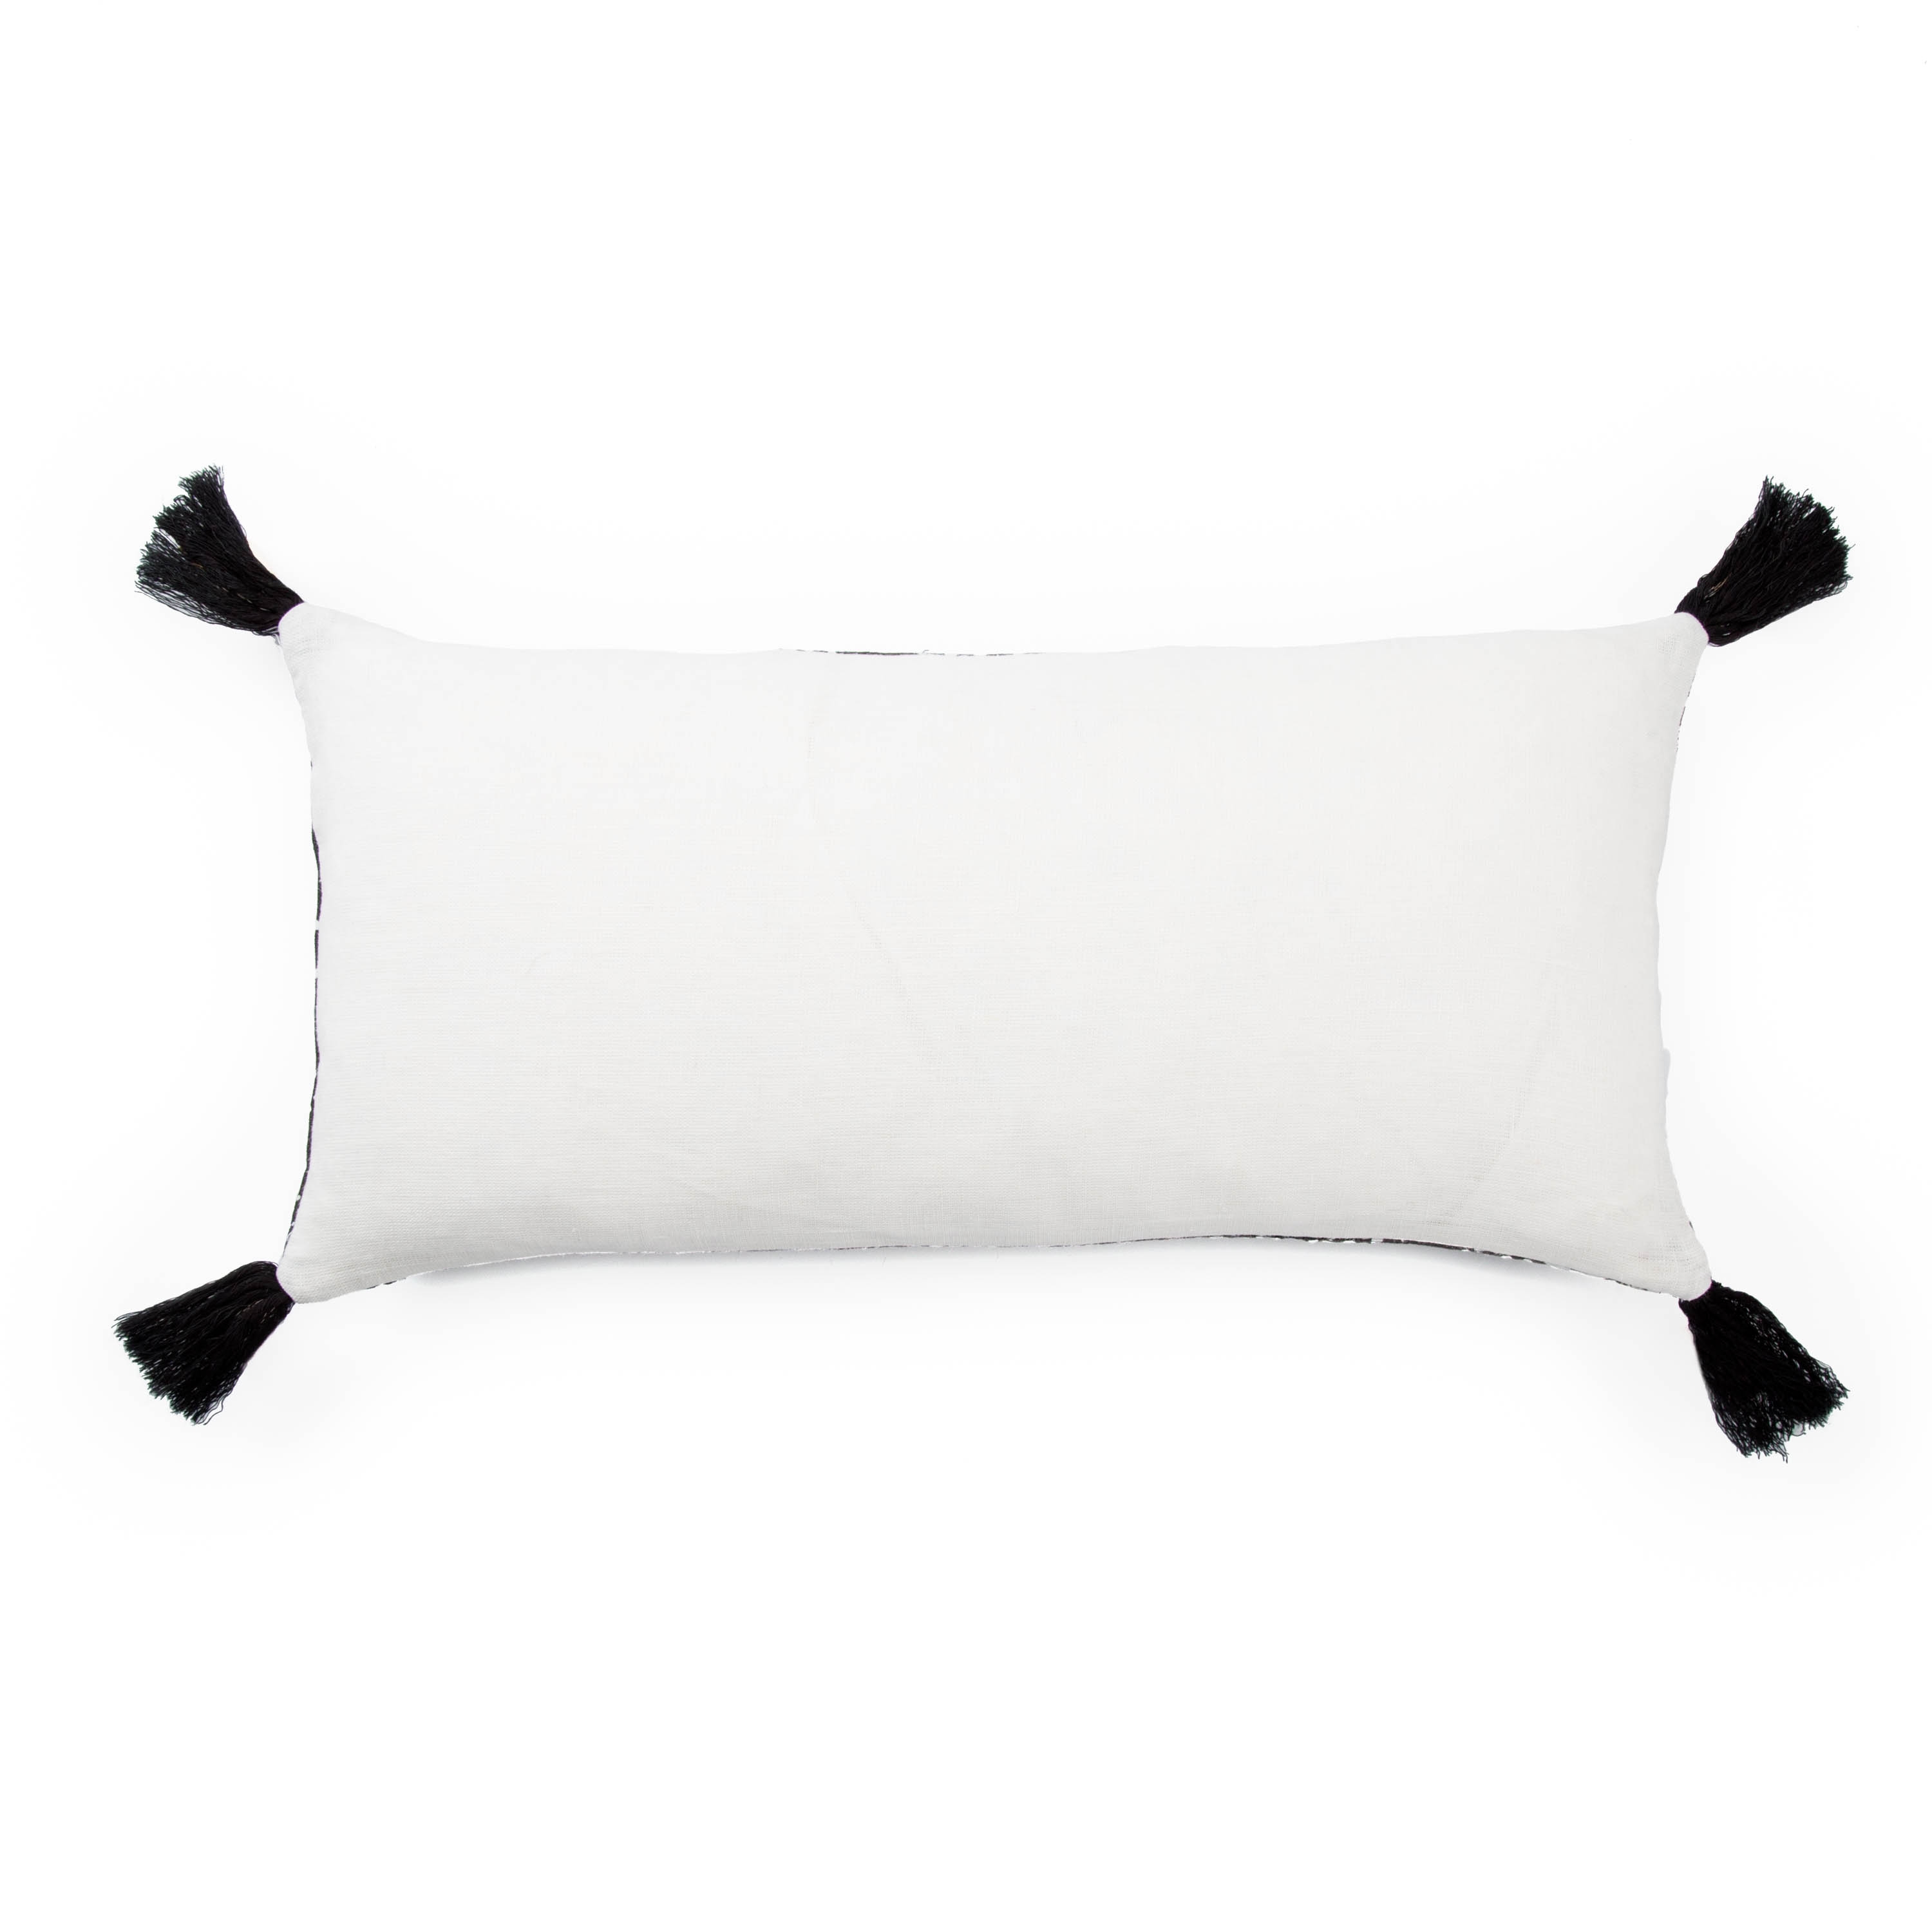 Design (US) Black 10"X21" Pillow - Image 1